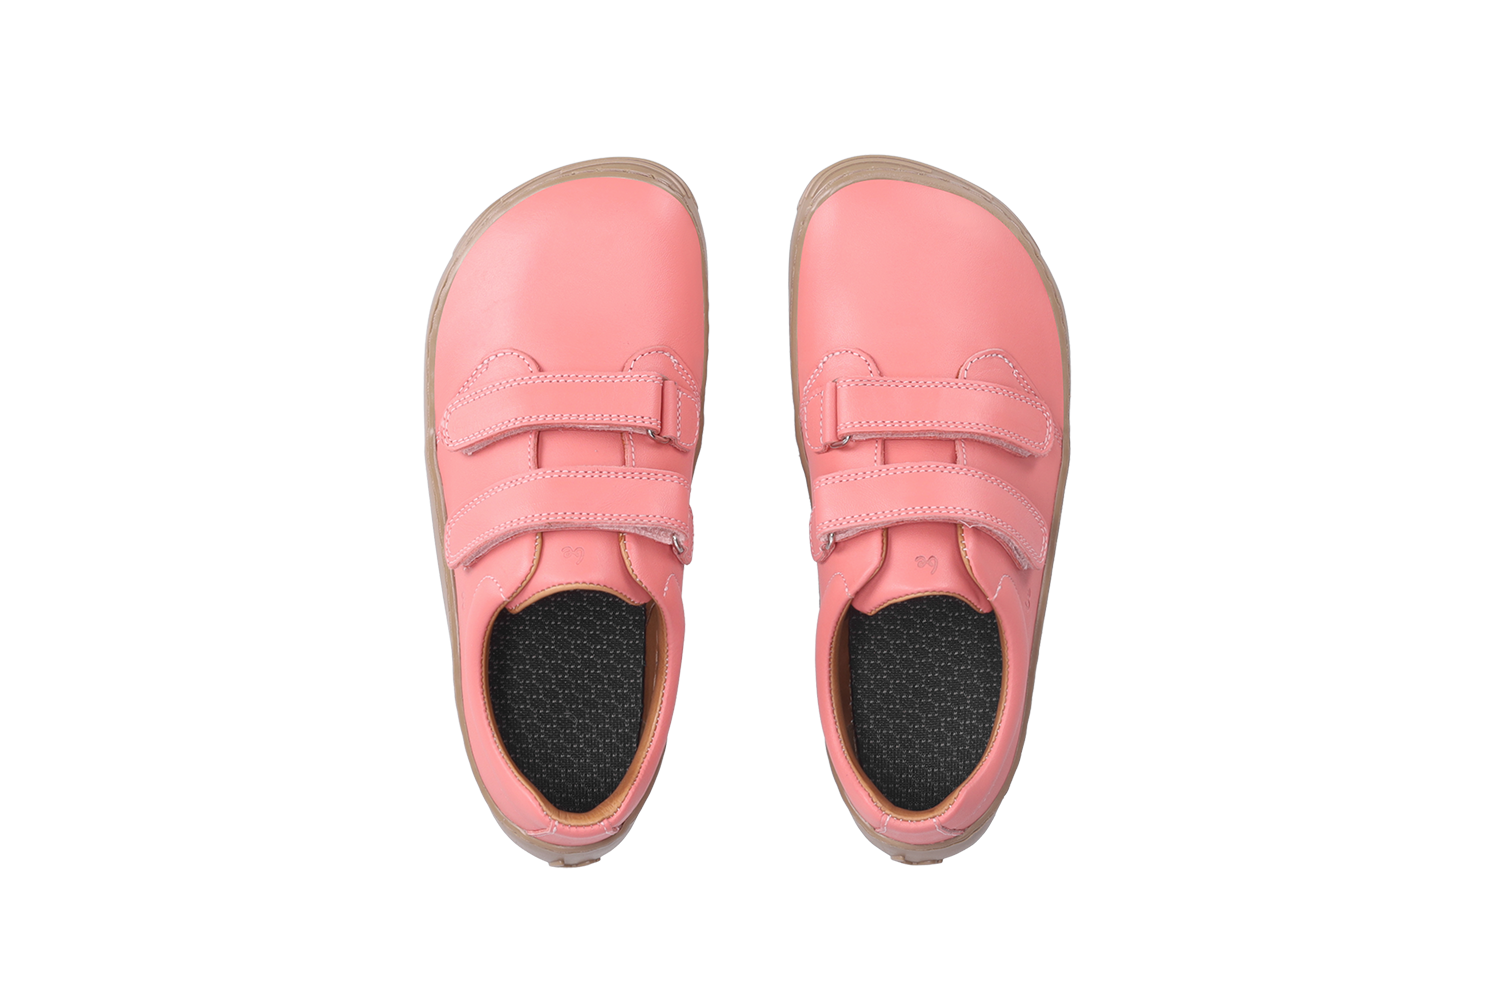 Zapatos barefoot de niños Be Lenka Bounce - Coral Pink – Cacles Barefoot